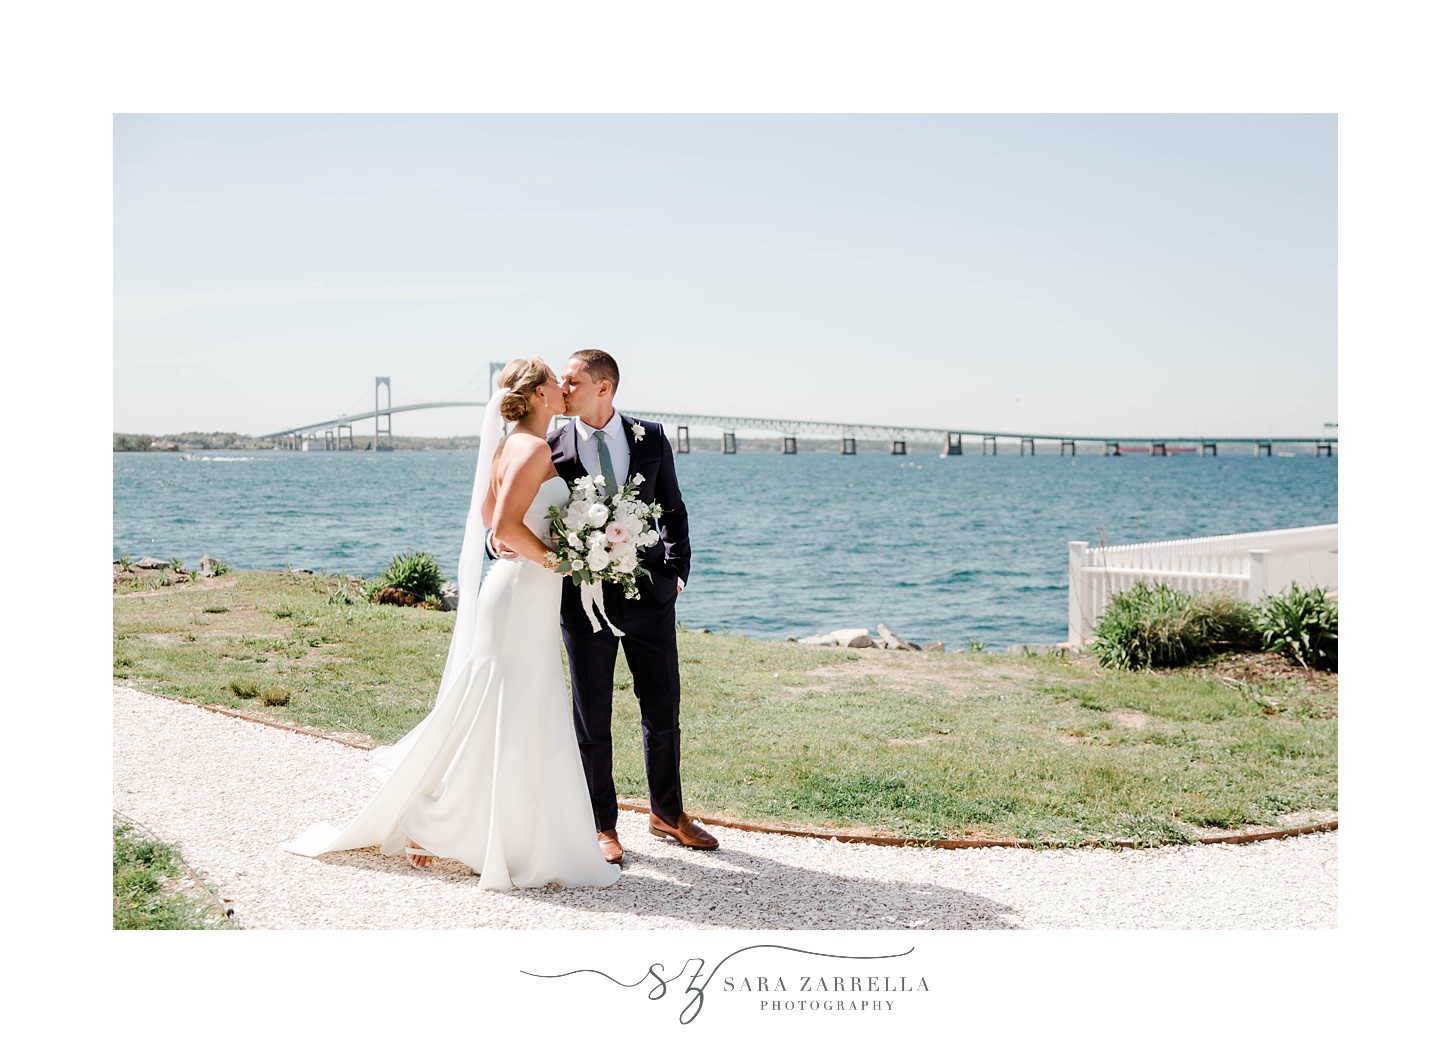 newlyweds kiss with Newport Bridge behind them